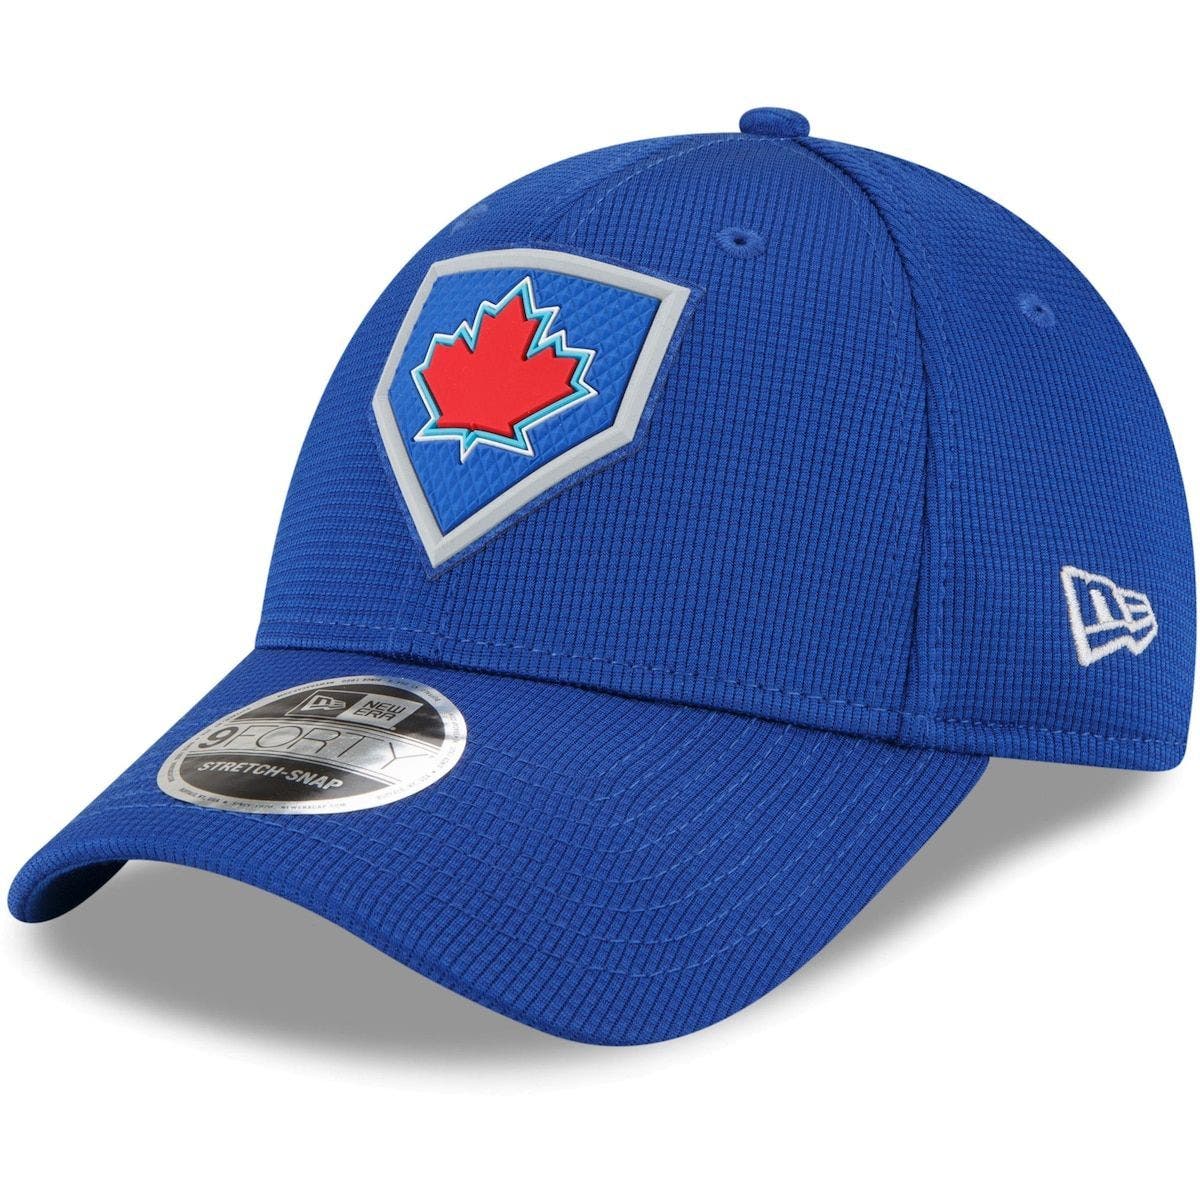 Toronto Jays Hat Urban Outfitters Men Accessories Headwear Hats 